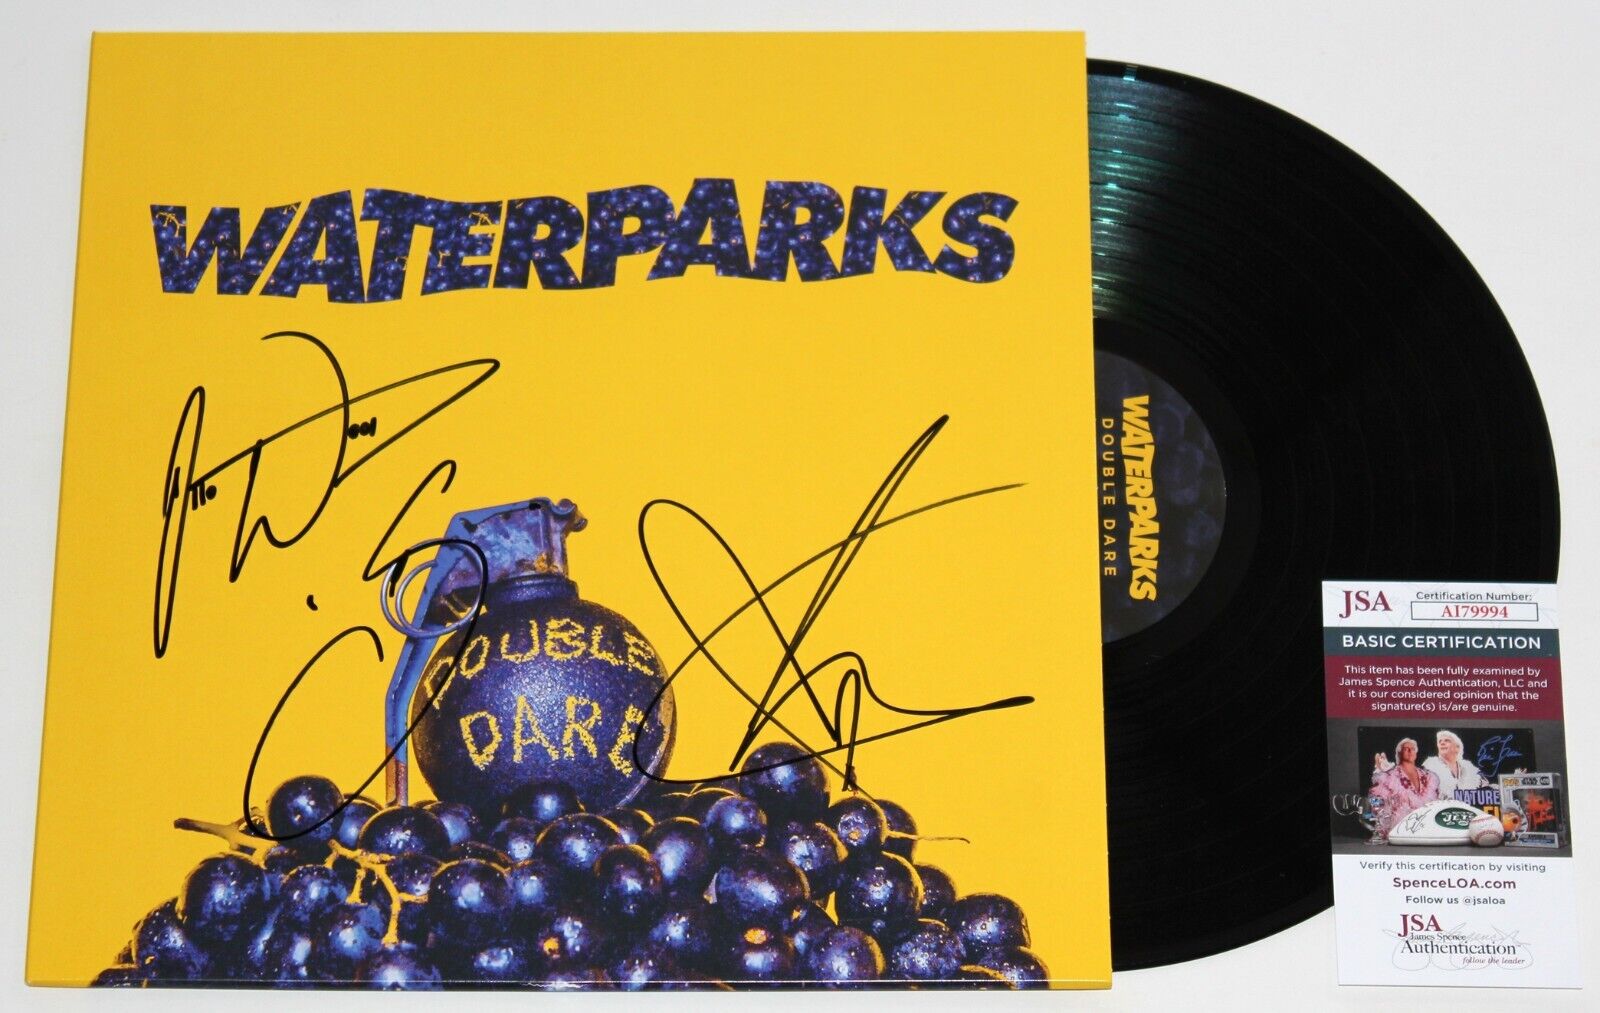 WATERPARKS BAND SIGNED DOUBLE DARE LP VINYL RECORD ALBUM AUTOGRAPHED +JSA COA